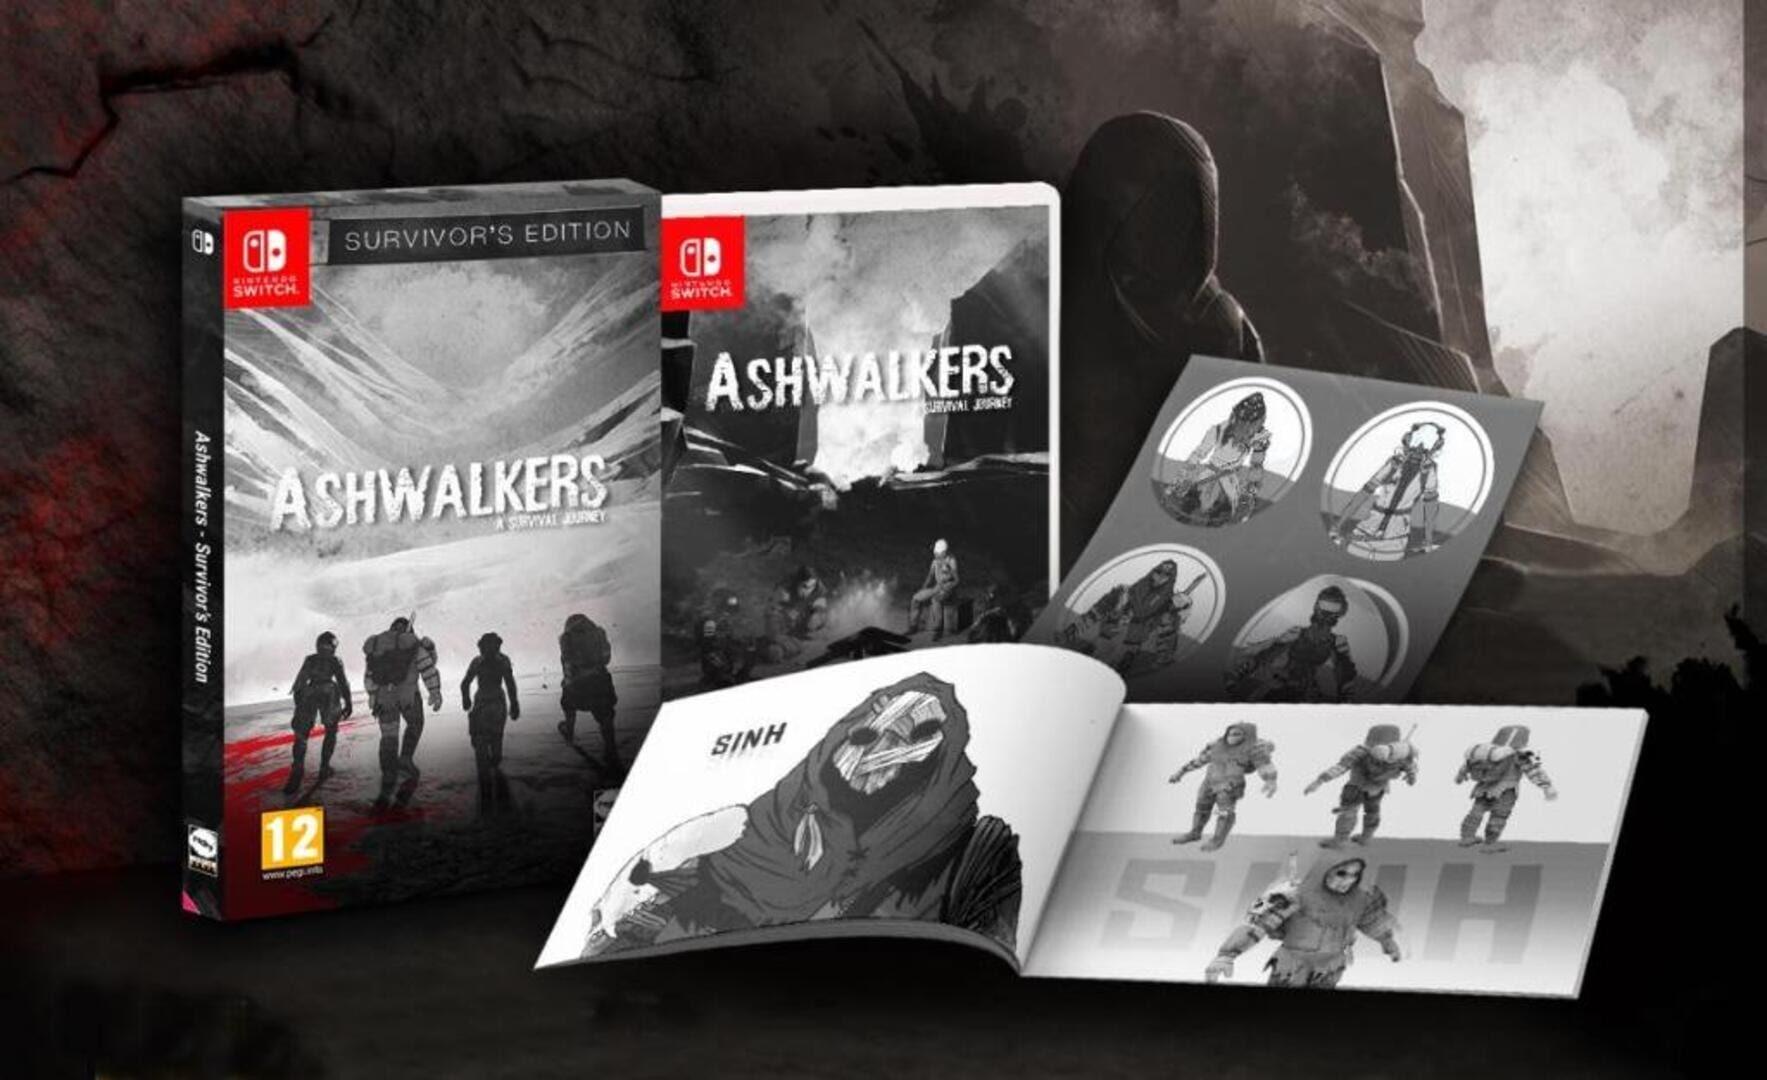 Ashwalkers: A Survival Journey - Survivor's Edition artwork